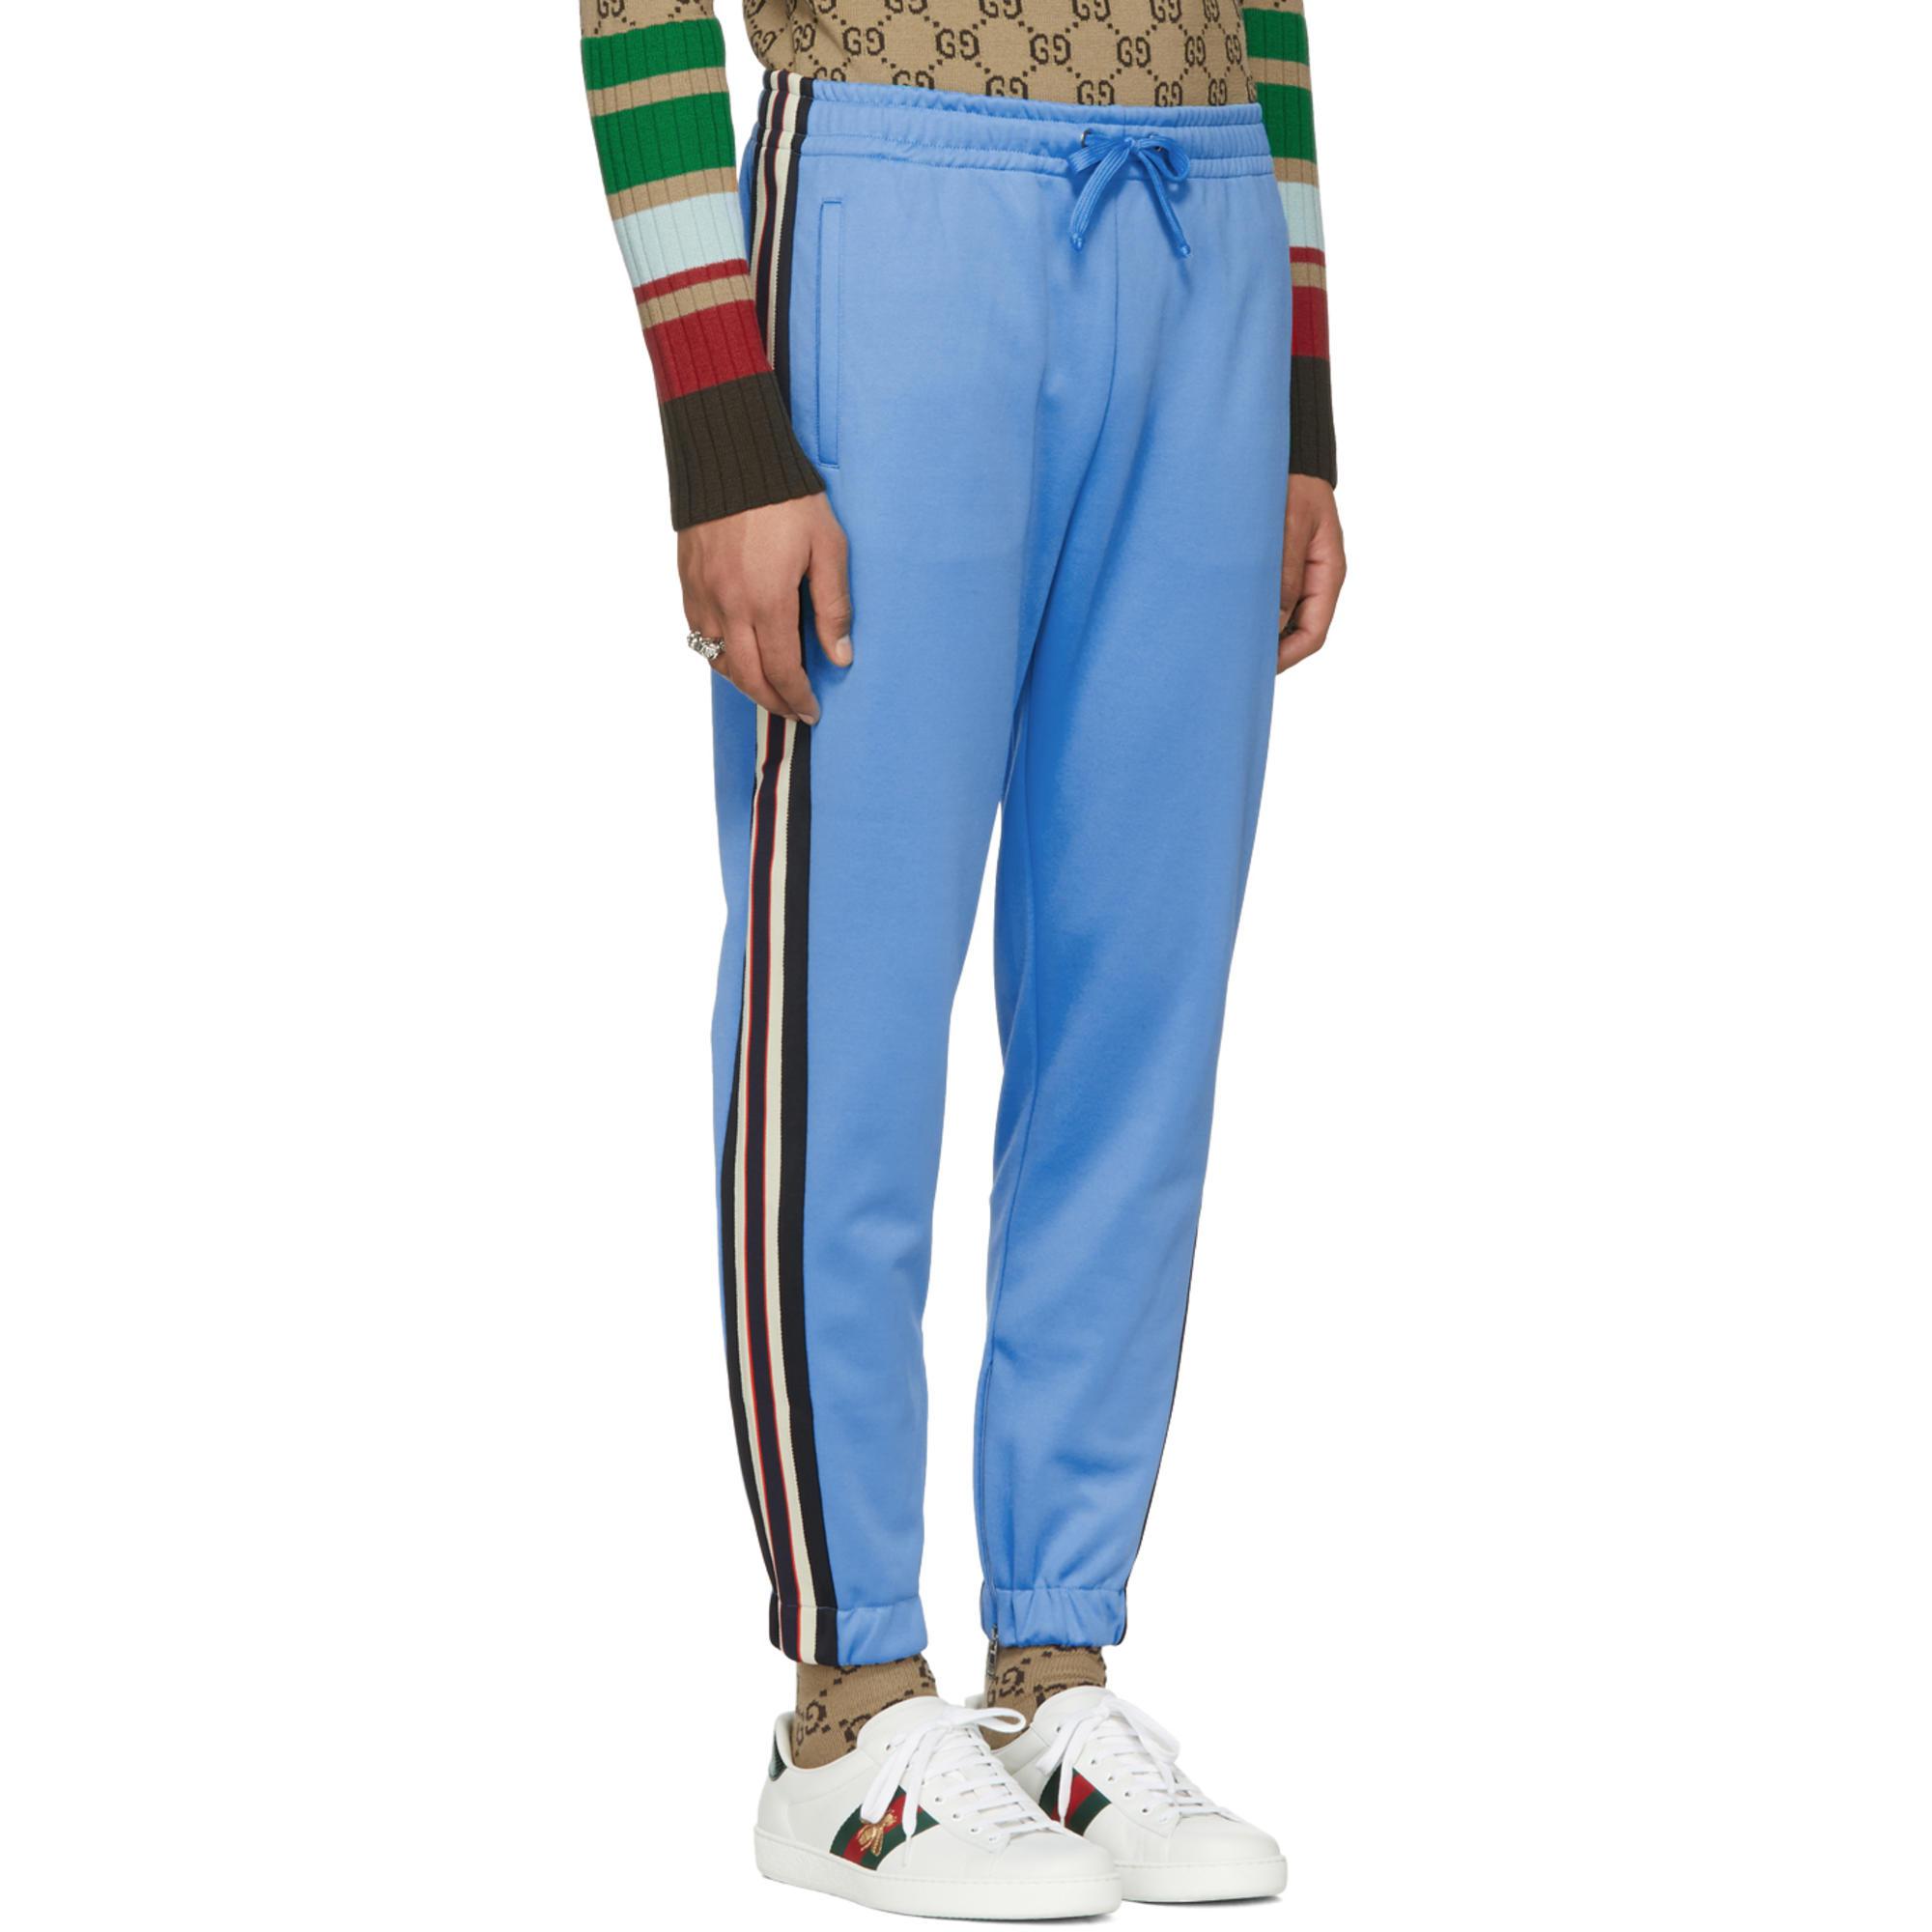 Lyst - Gucci Blue Logo Tape Sweatpants in Blue for Men